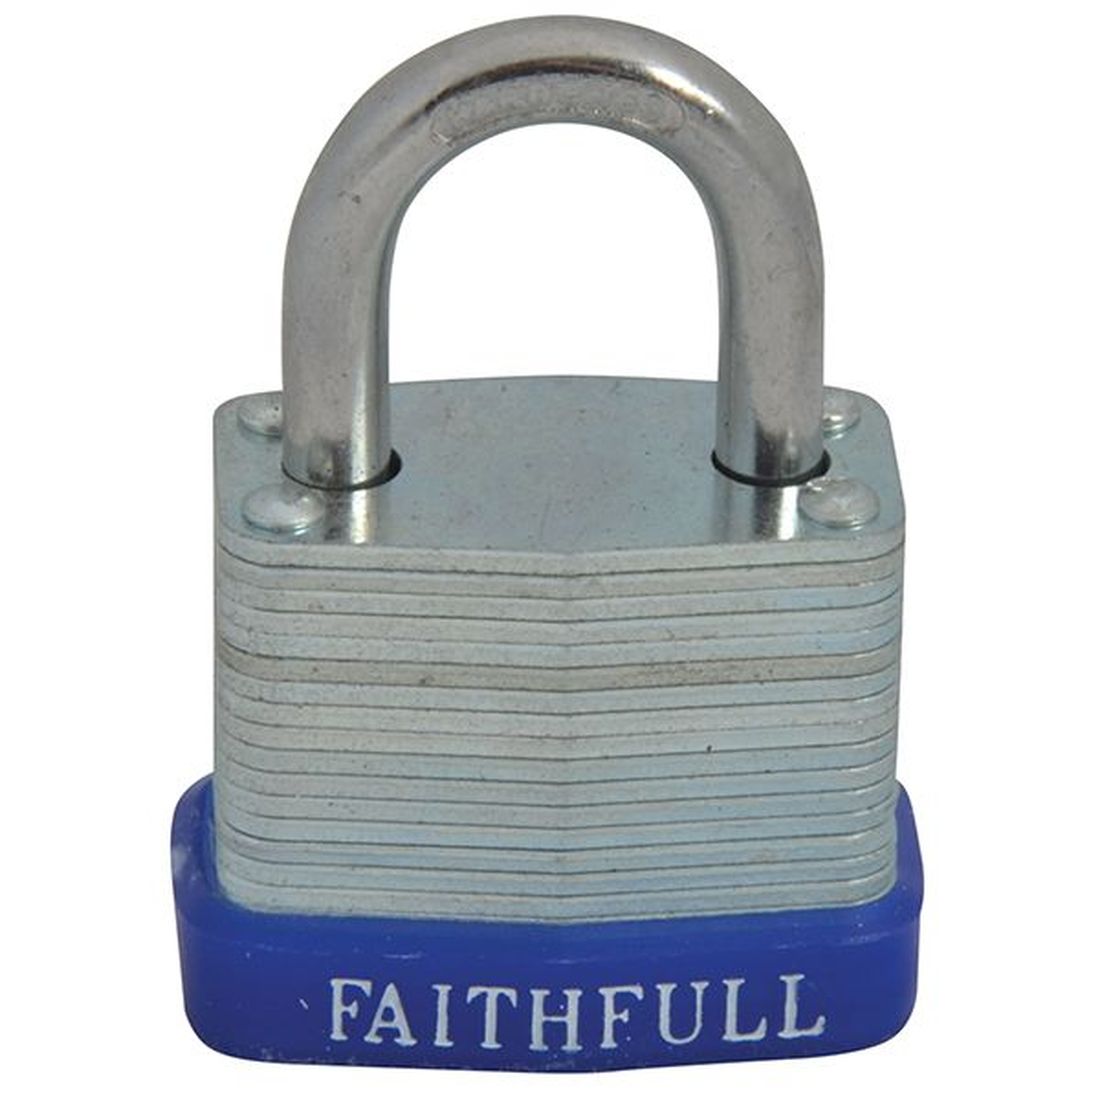 Faithfull Laminated Steel Padlock 30mm 3 Keys                                             